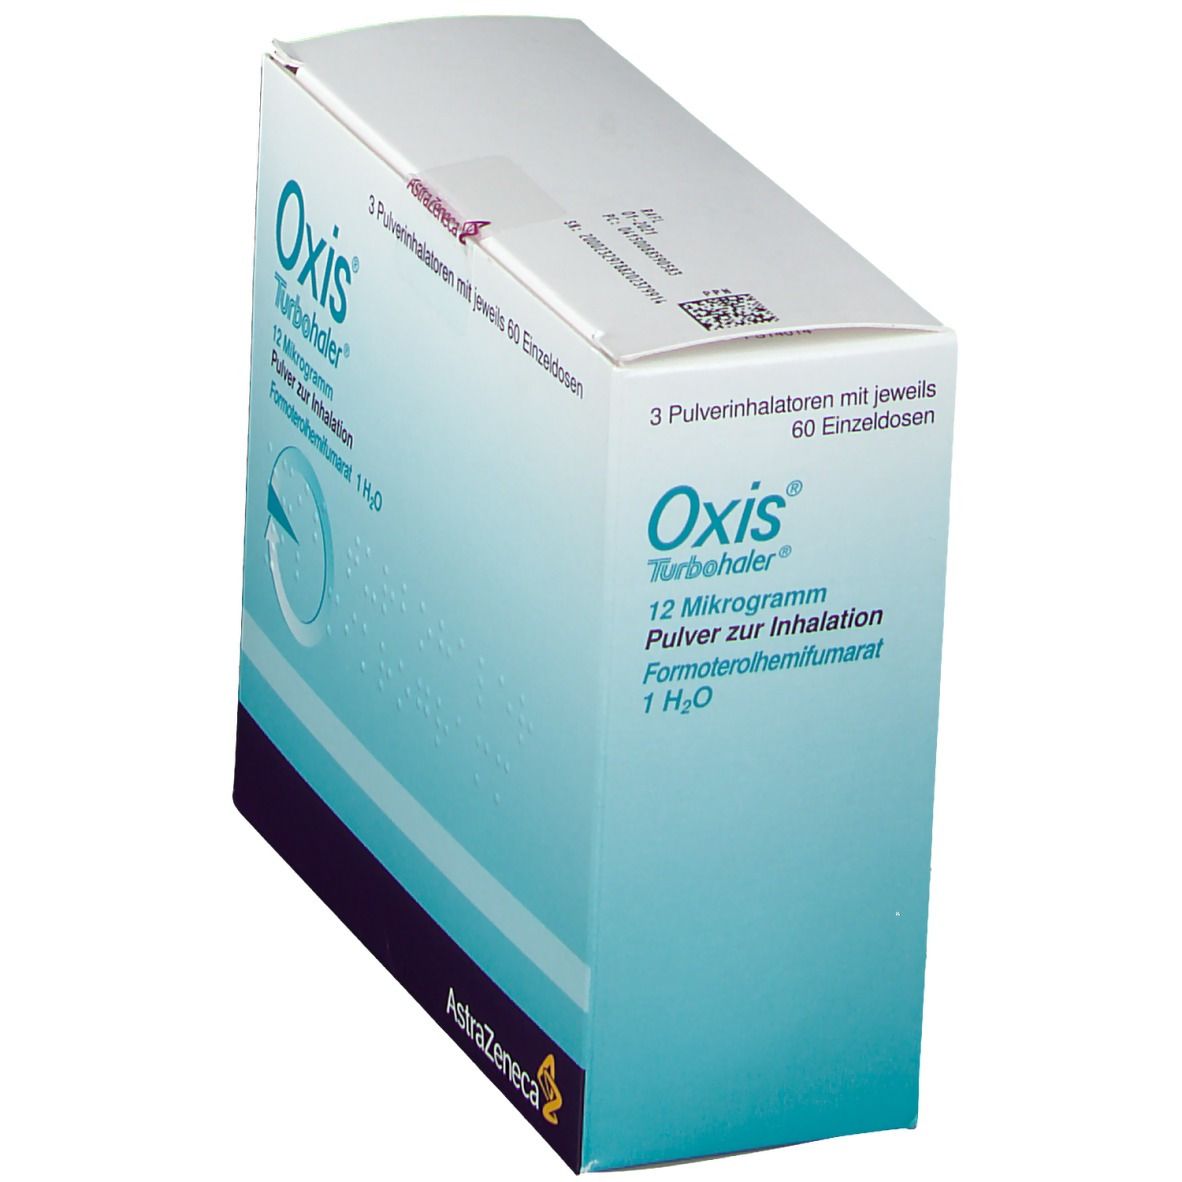 Oxis® Turbohaler  12 µg 60